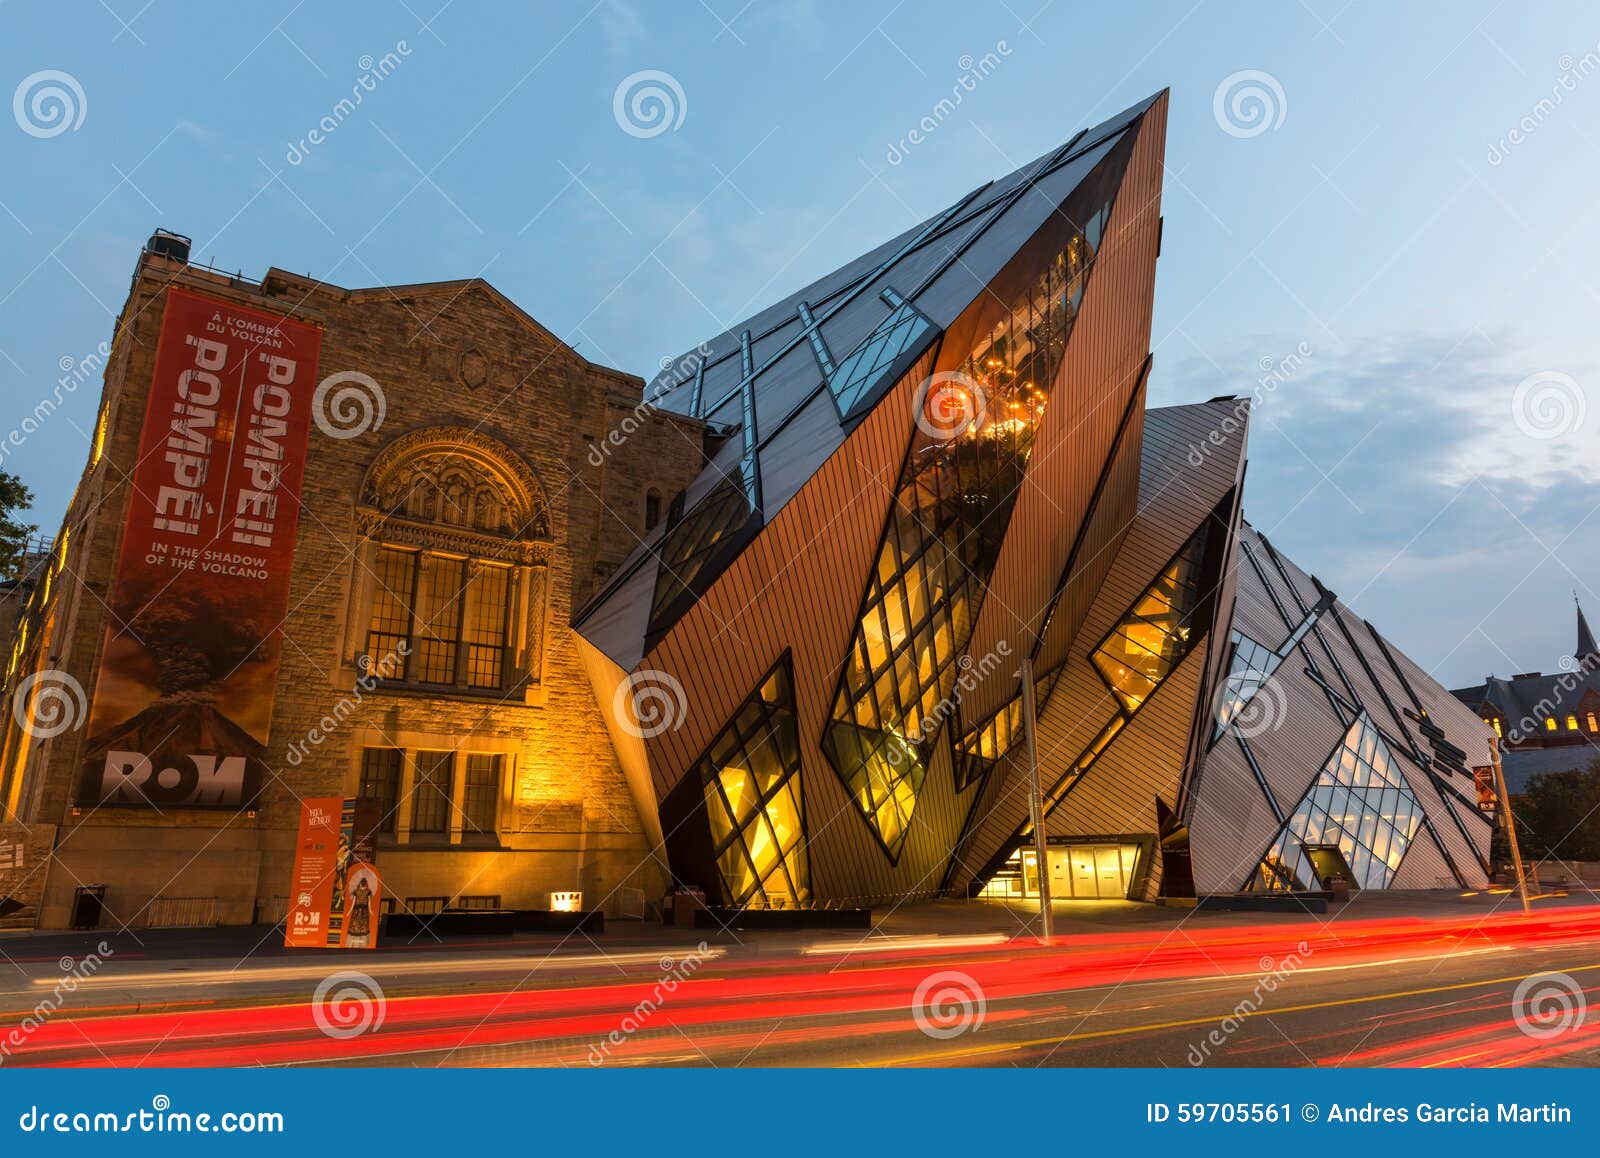 Royal Ontario Museum - Libeskind